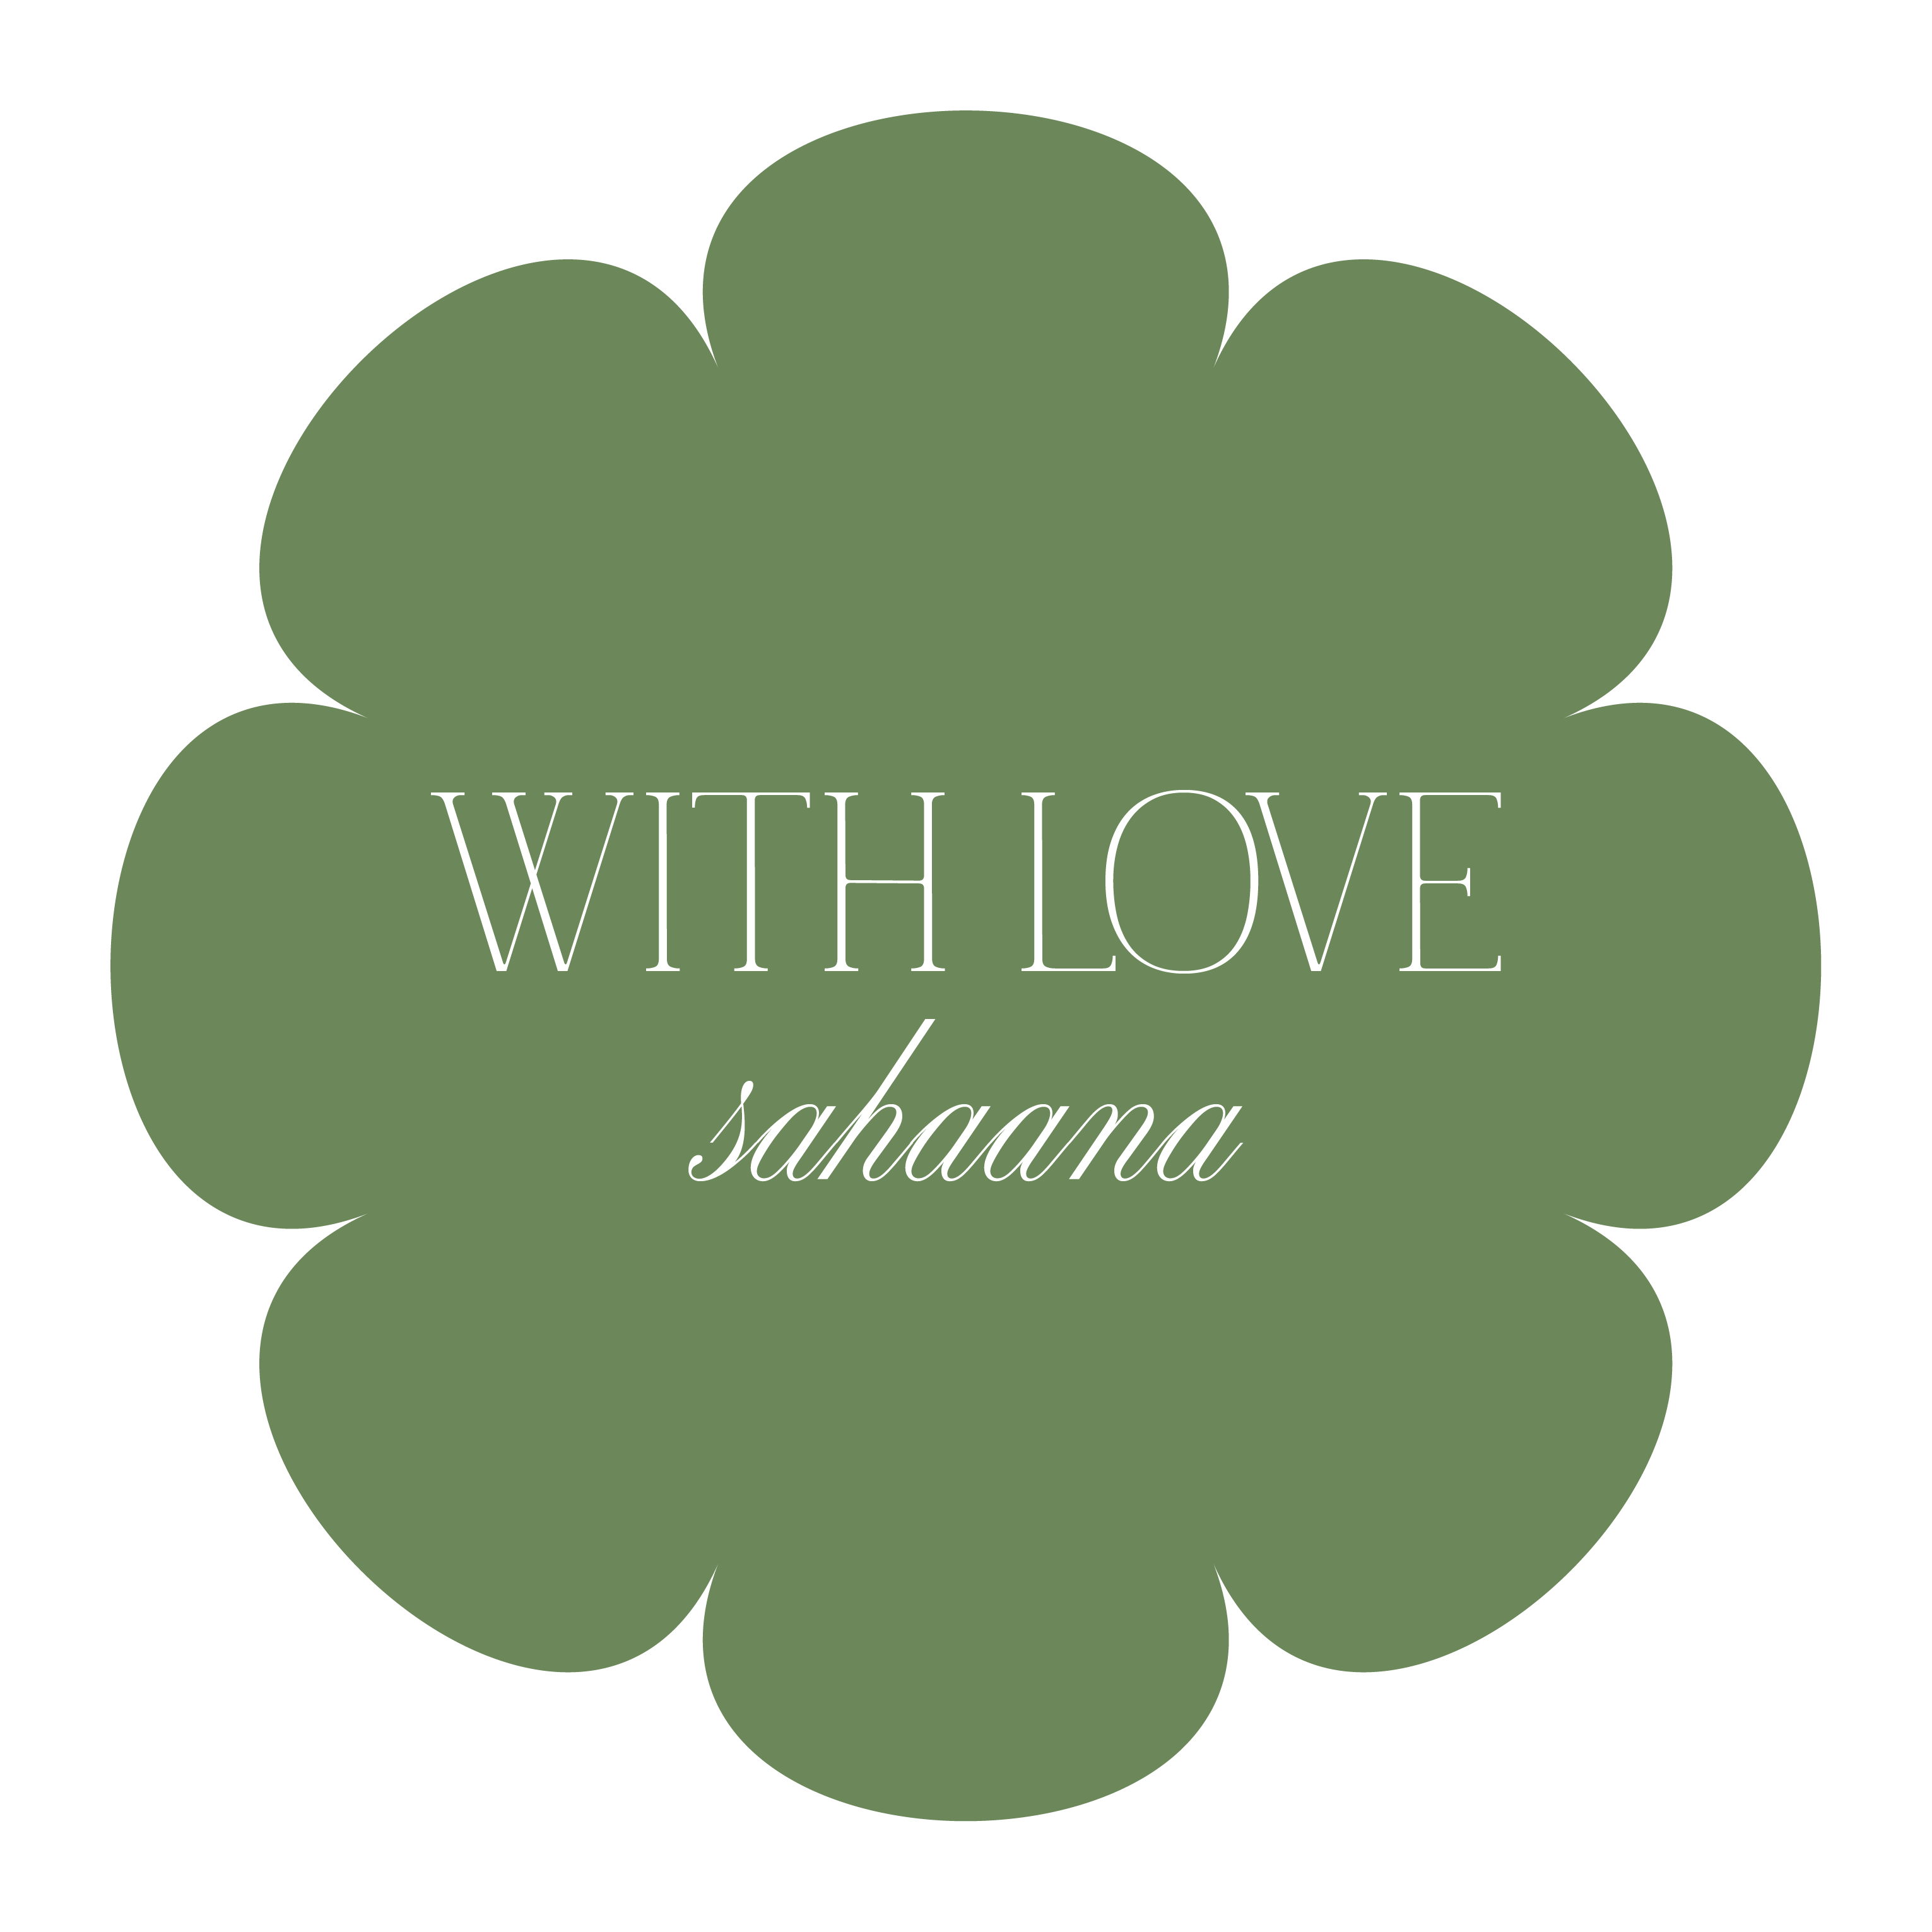 With love, Sahaana